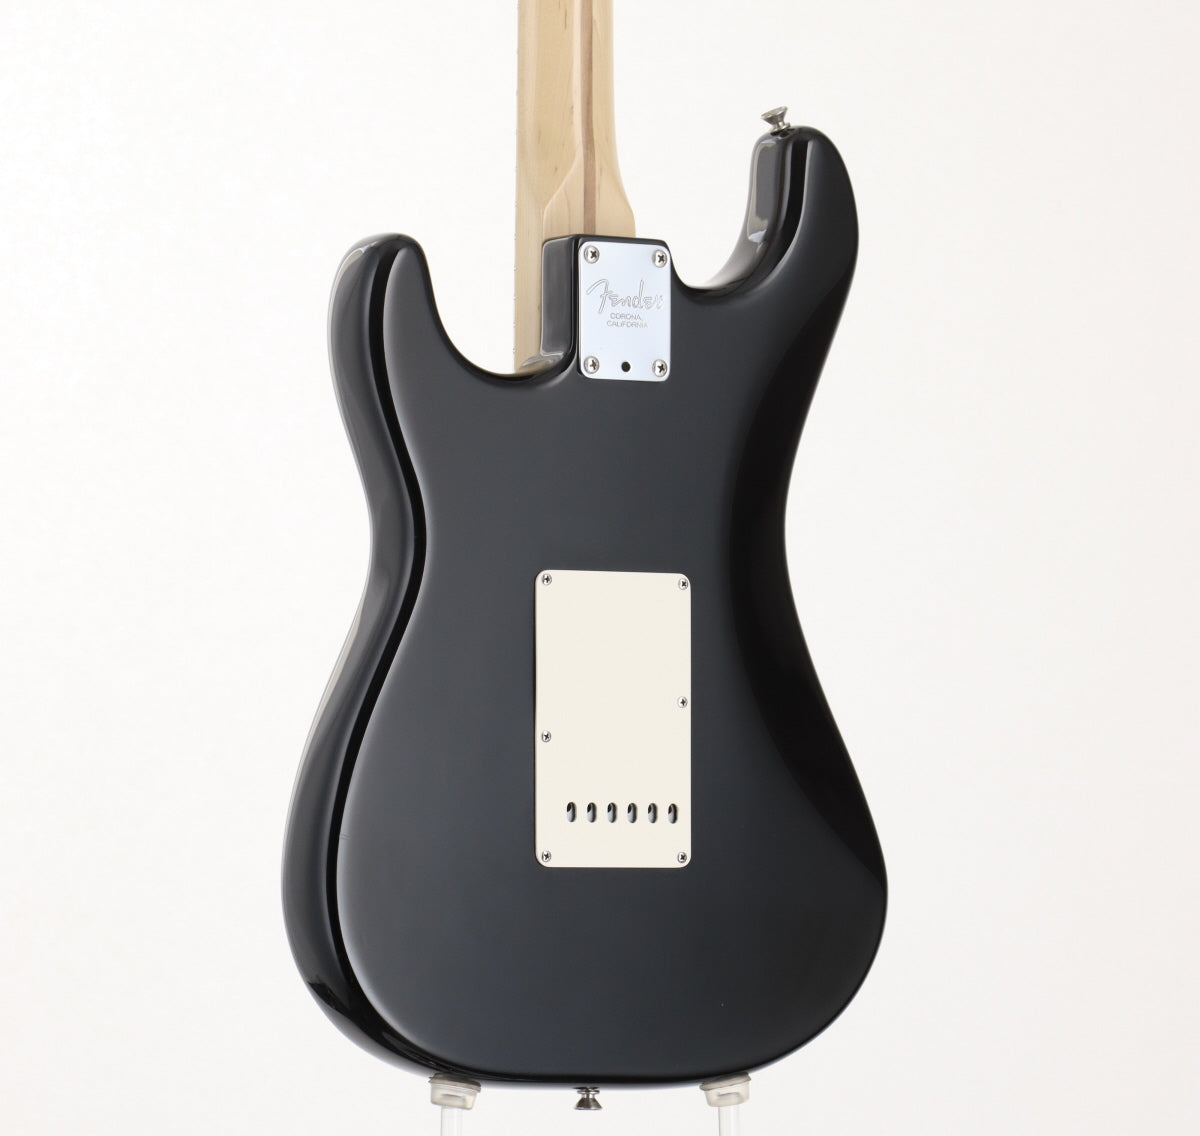 [SN SZ3234100] USED Fender / Artist Series Eric Clapton Stratocaster Black 2004 [06]